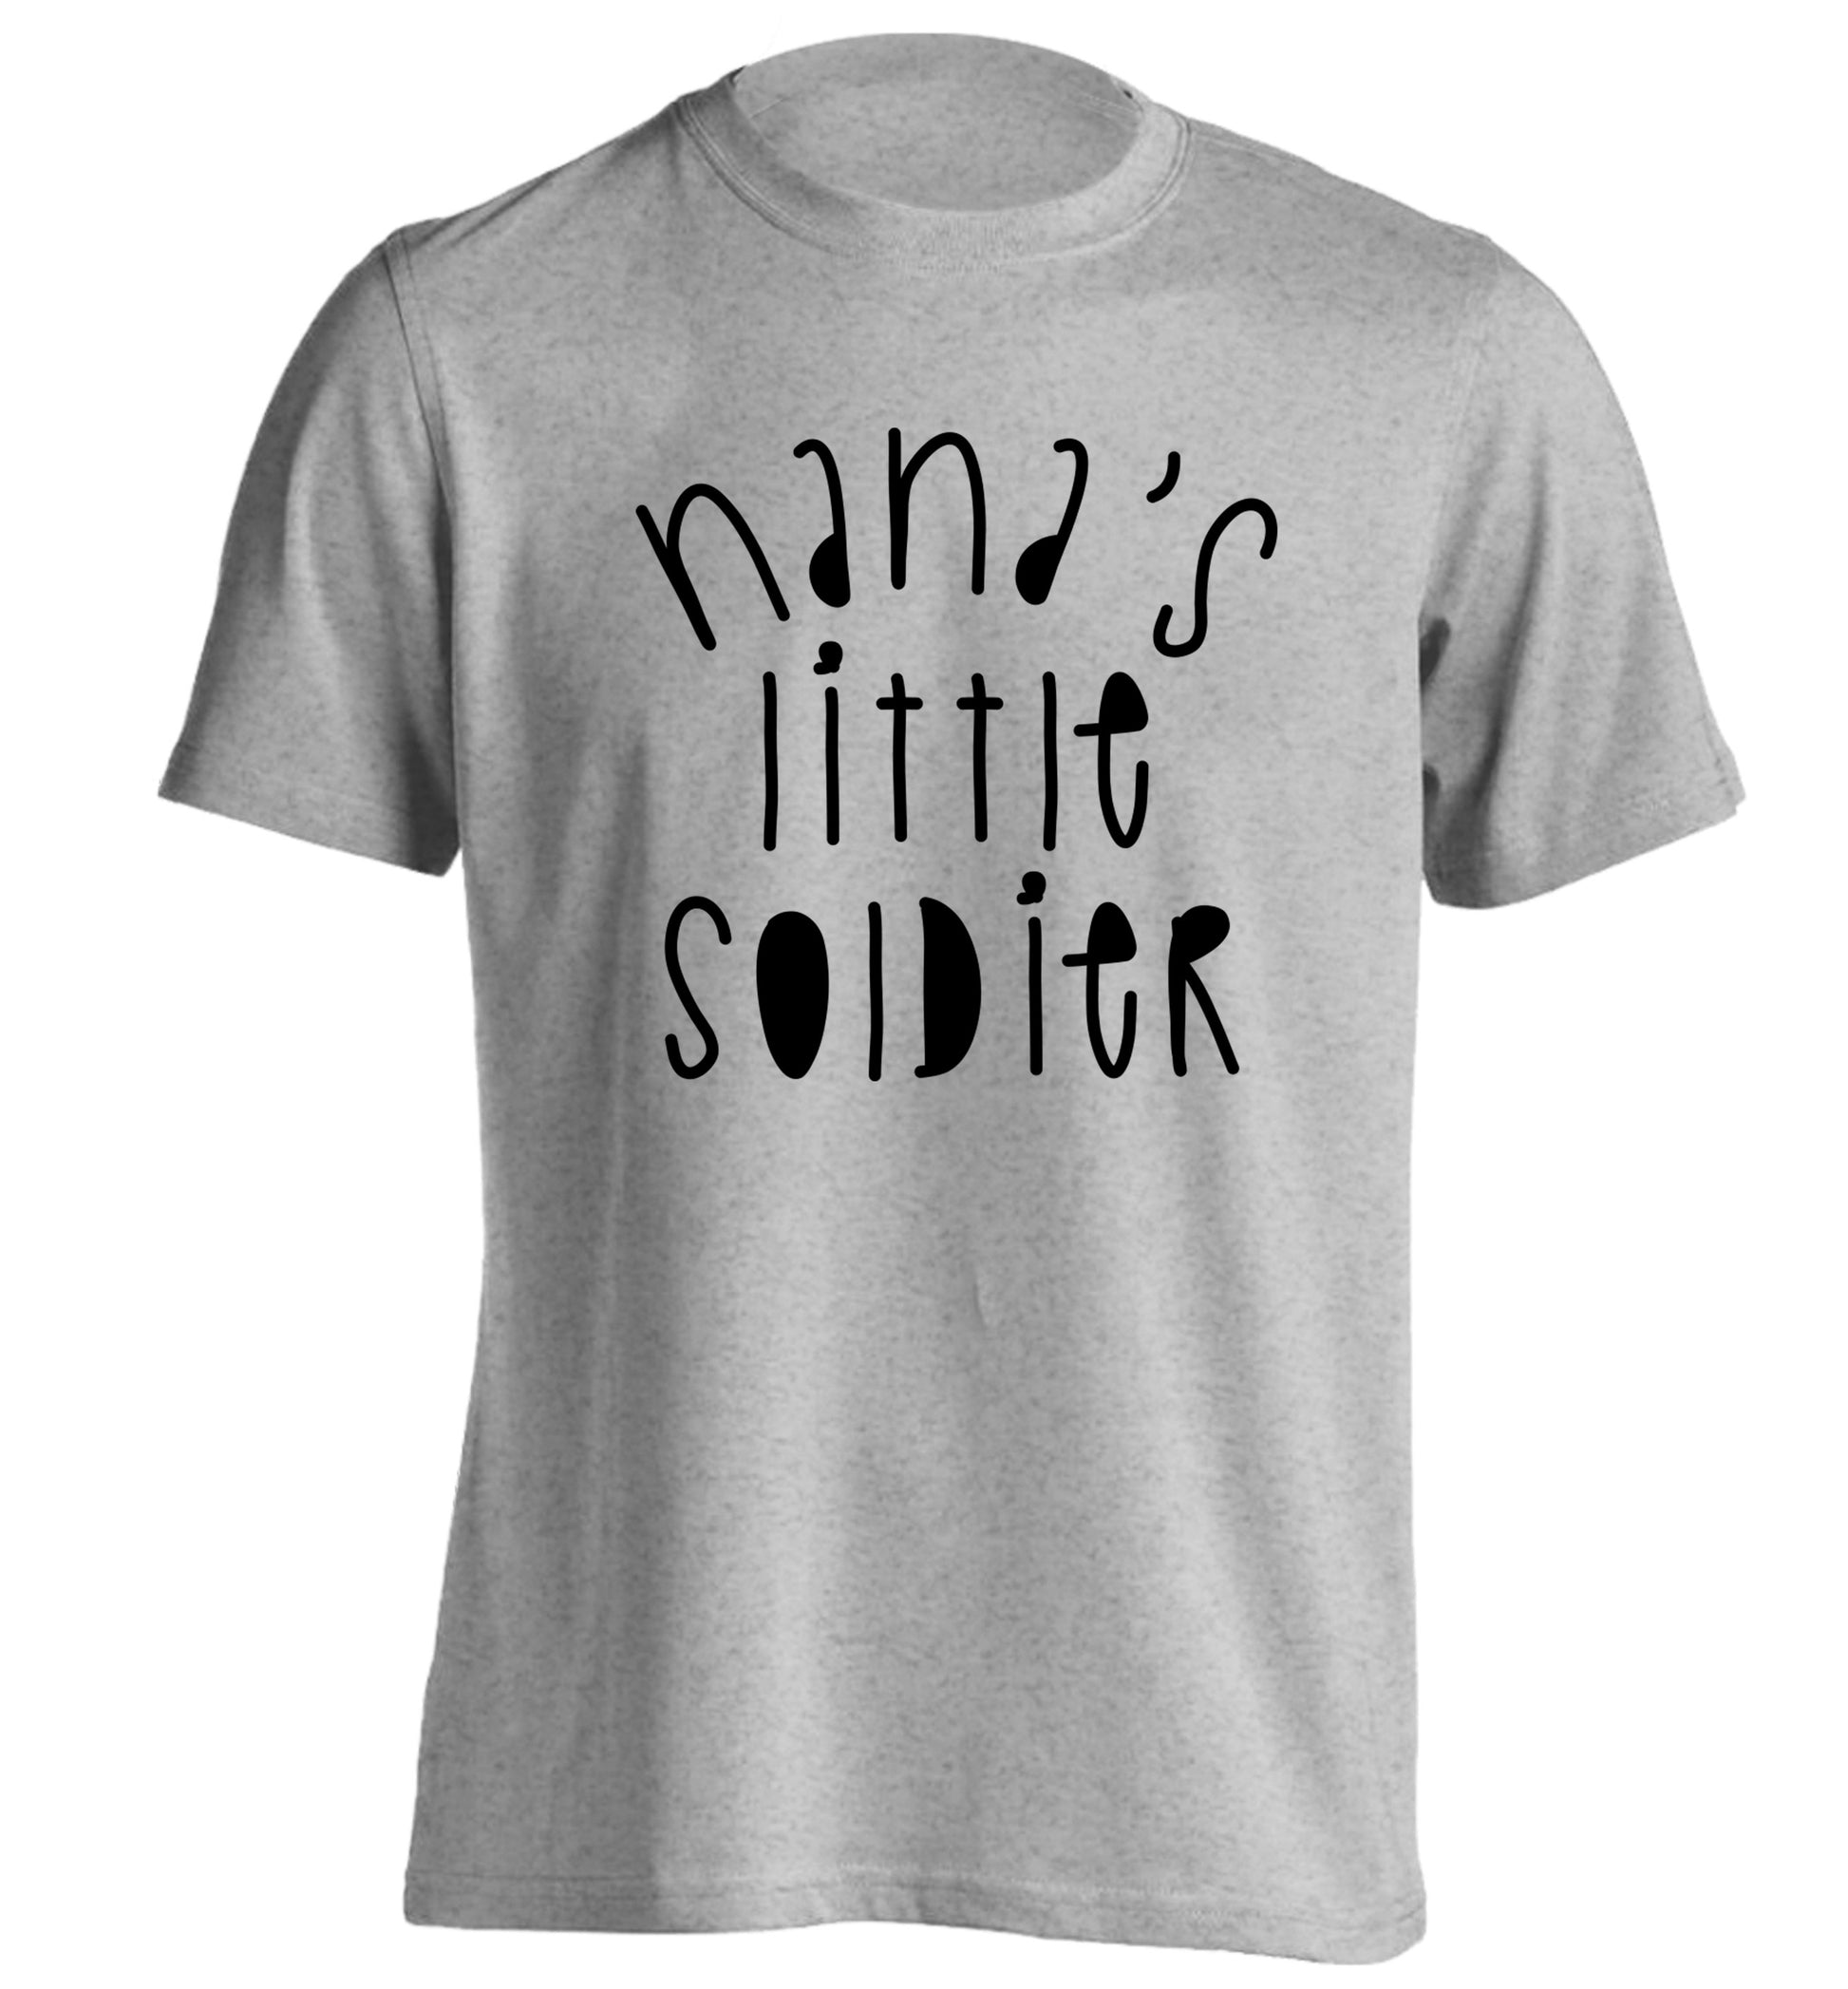 Nana's little soldier adults unisex grey Tshirt 2XL